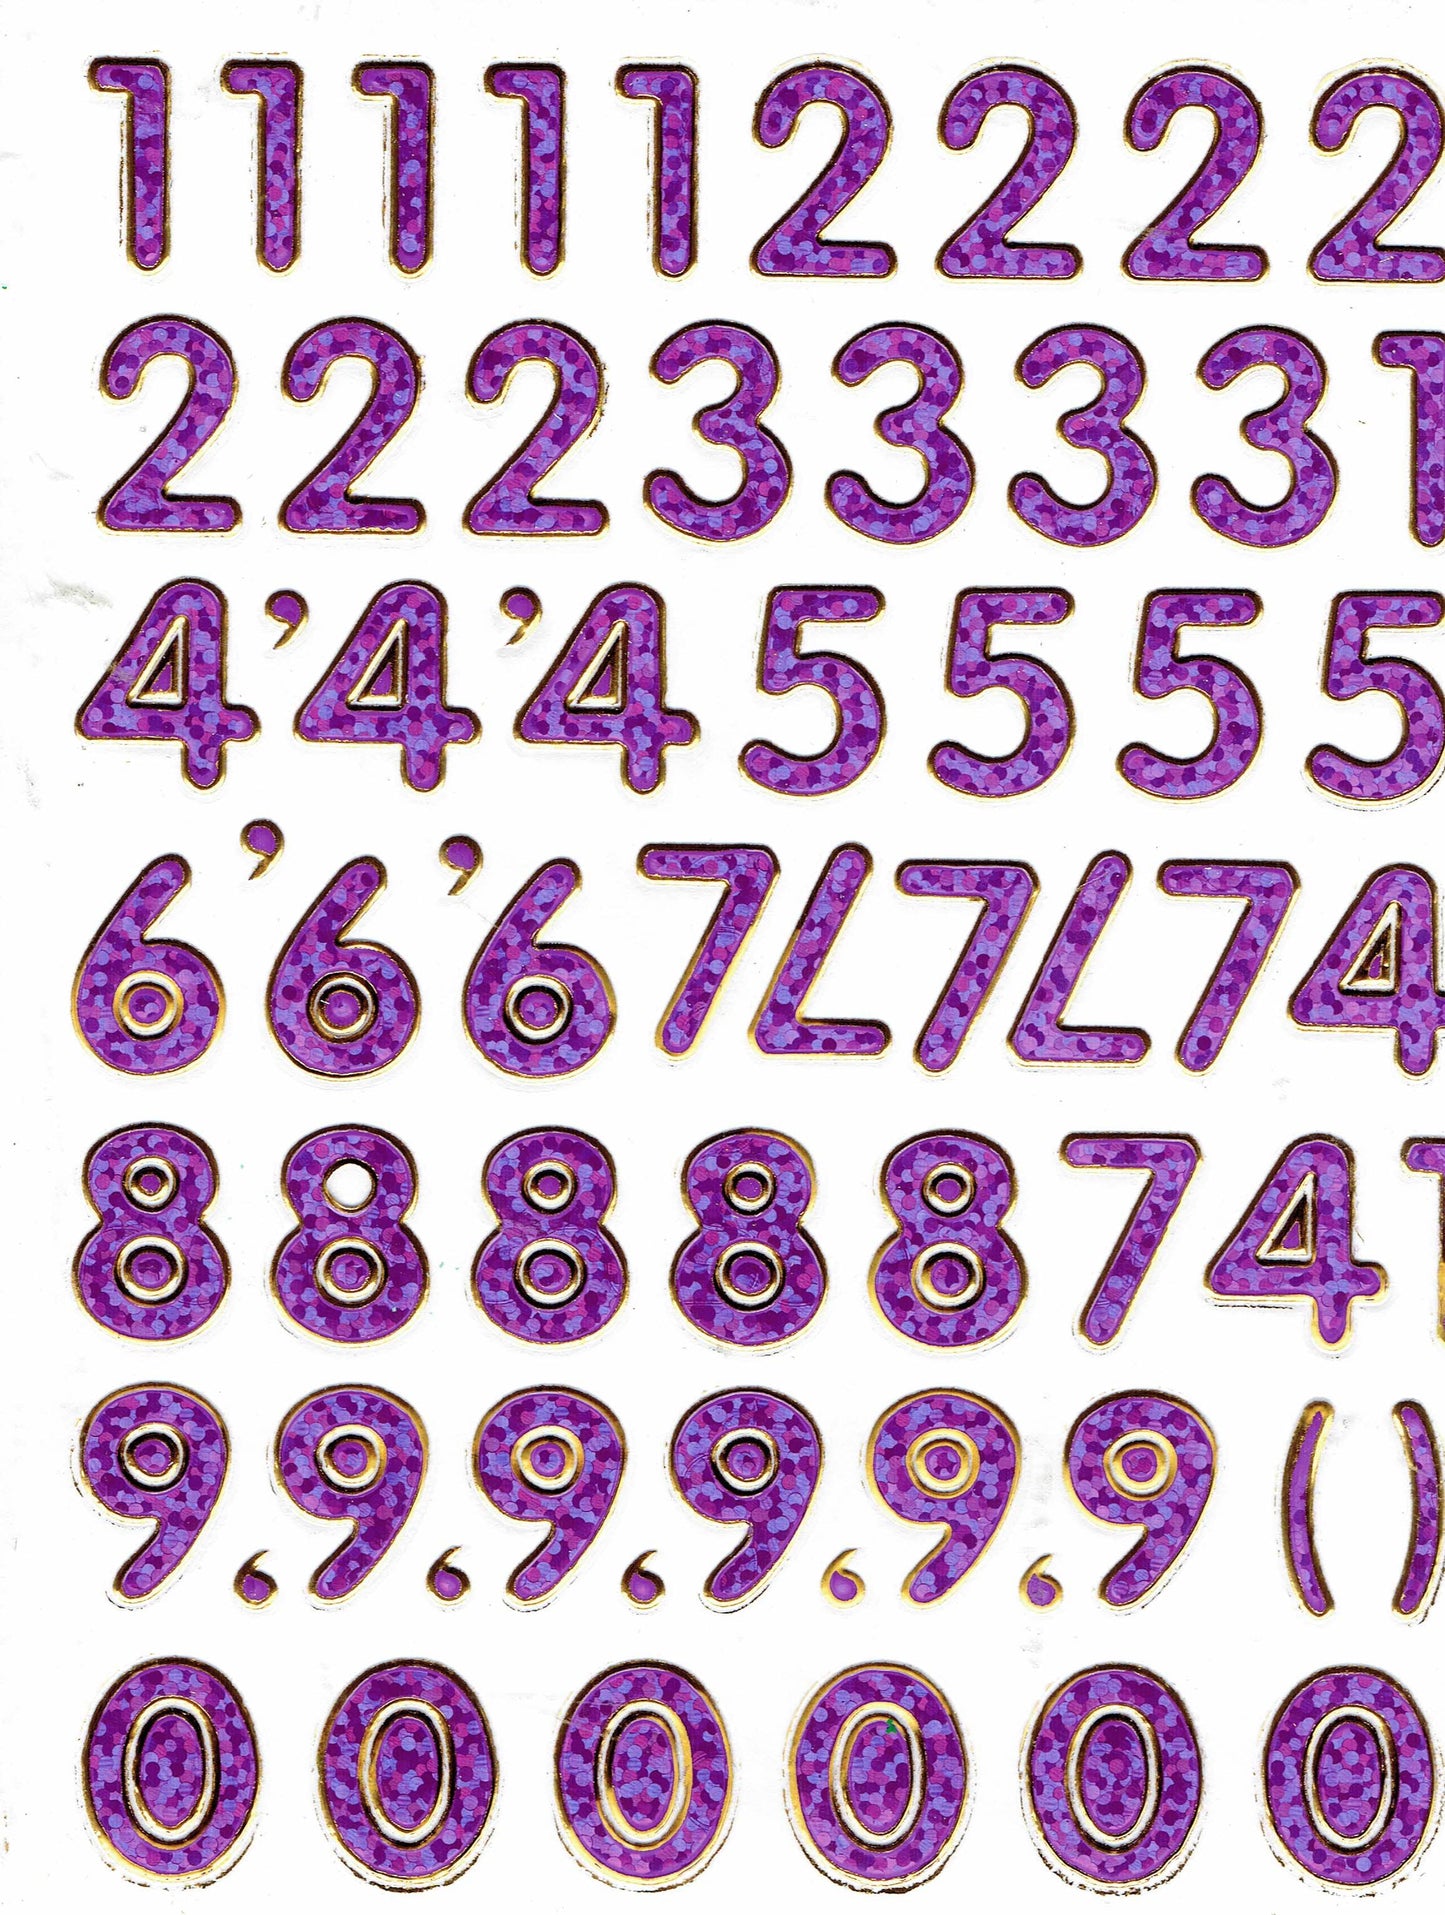 Zahlen Nummern lila 123 Höhe 14 mm Aufkleber Sticker metallic Glitzer Effekt Schule Büro Ordner Kinder Basteln Kindergarten 1 Bogen 196